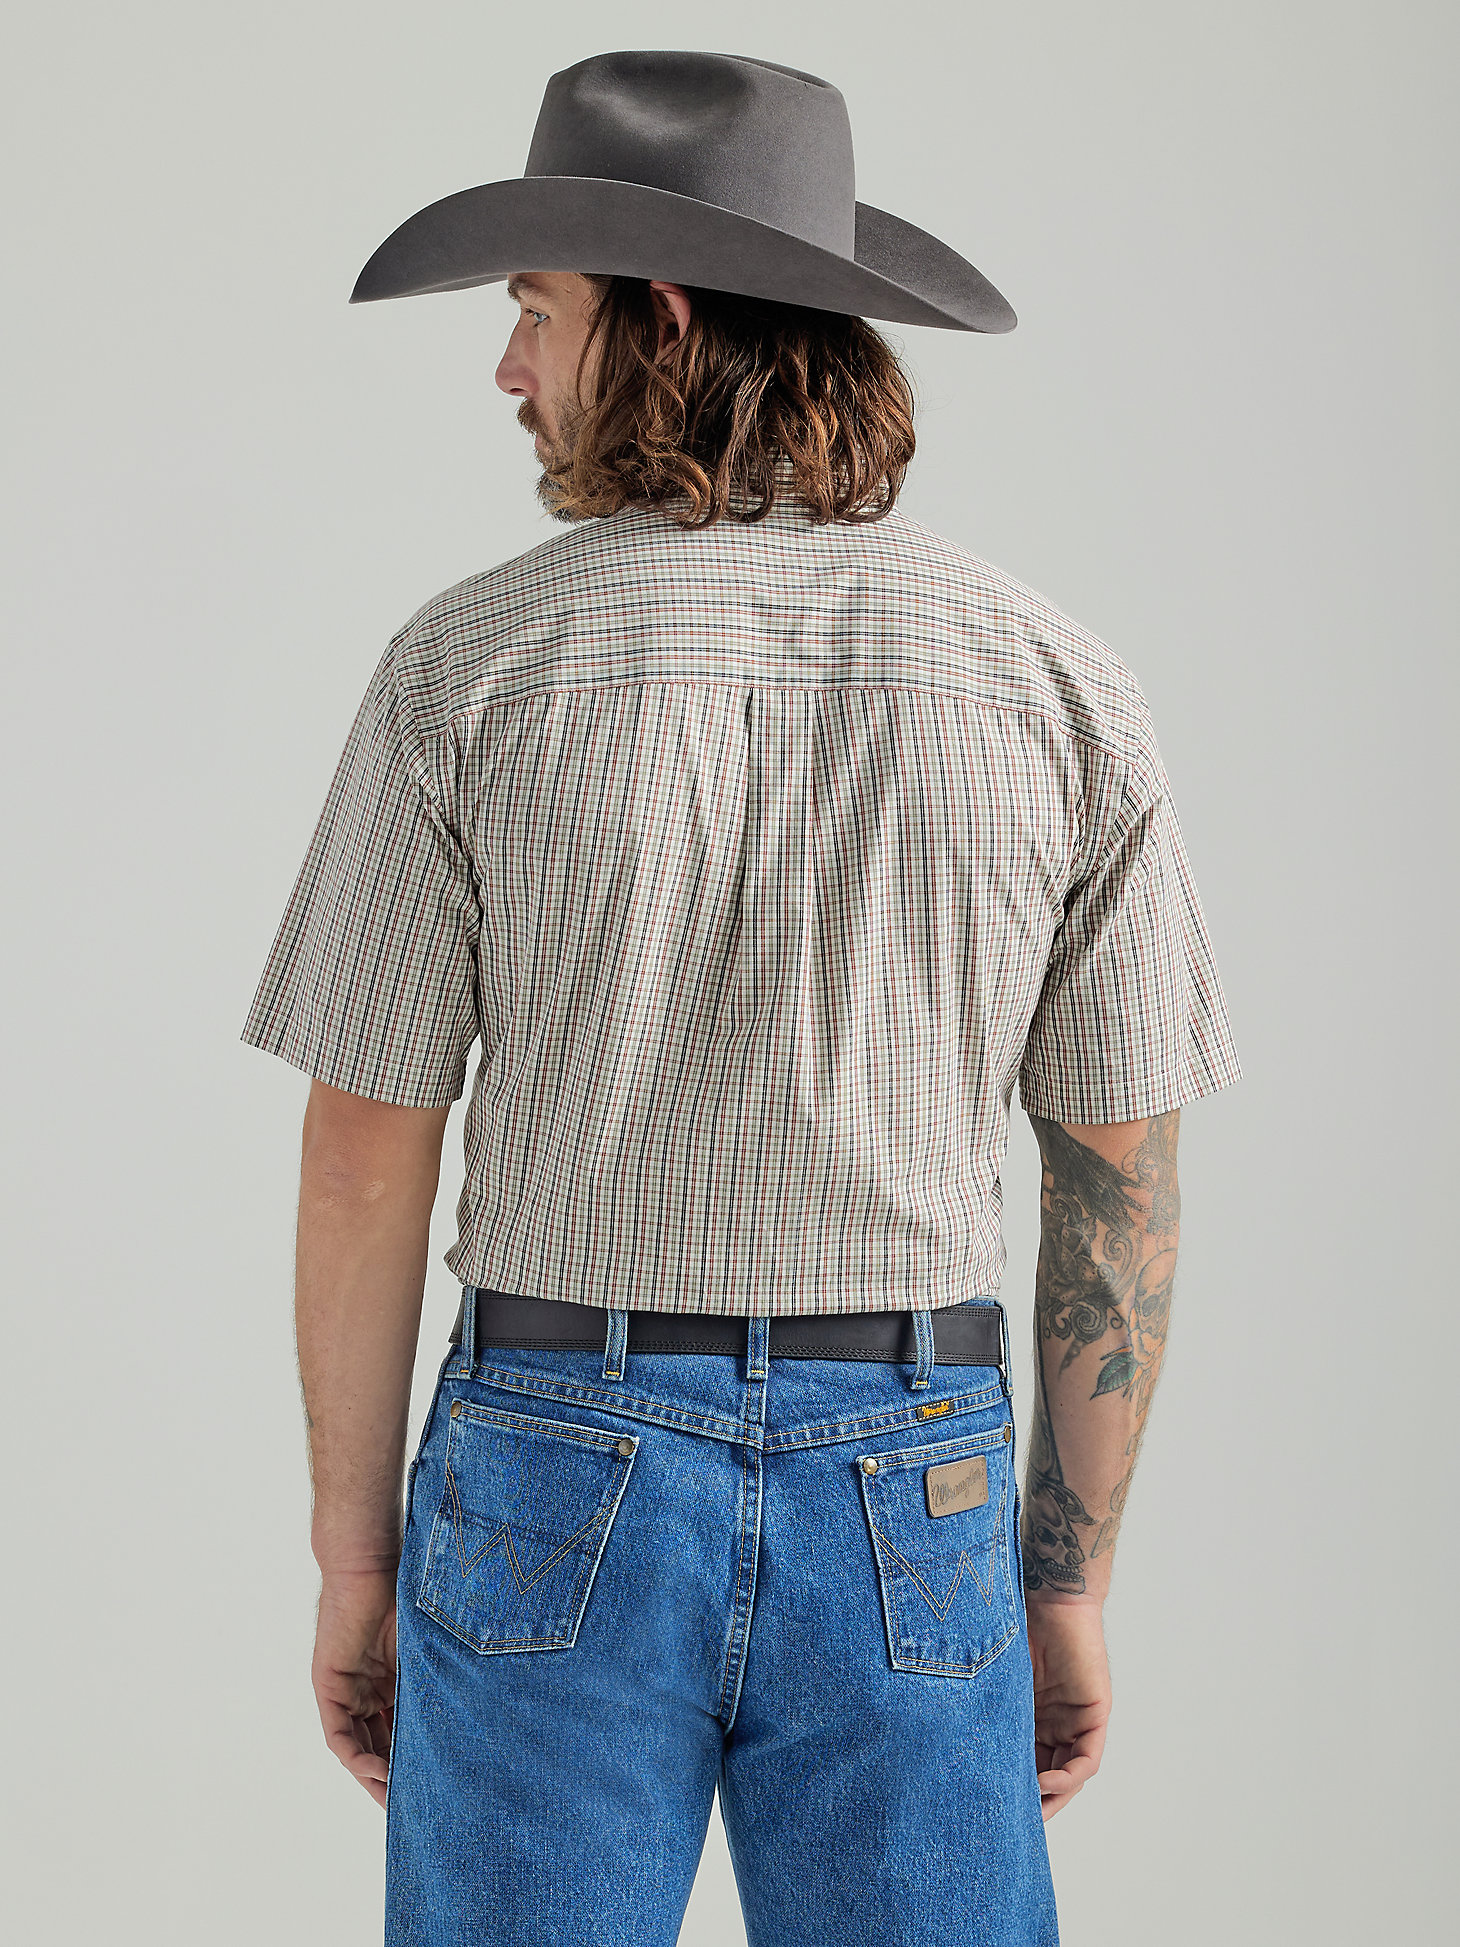 Men's George Strait® Short Sleeve 1 Pocket Button Down Plaid Shirt in Olive Red alternative view 1